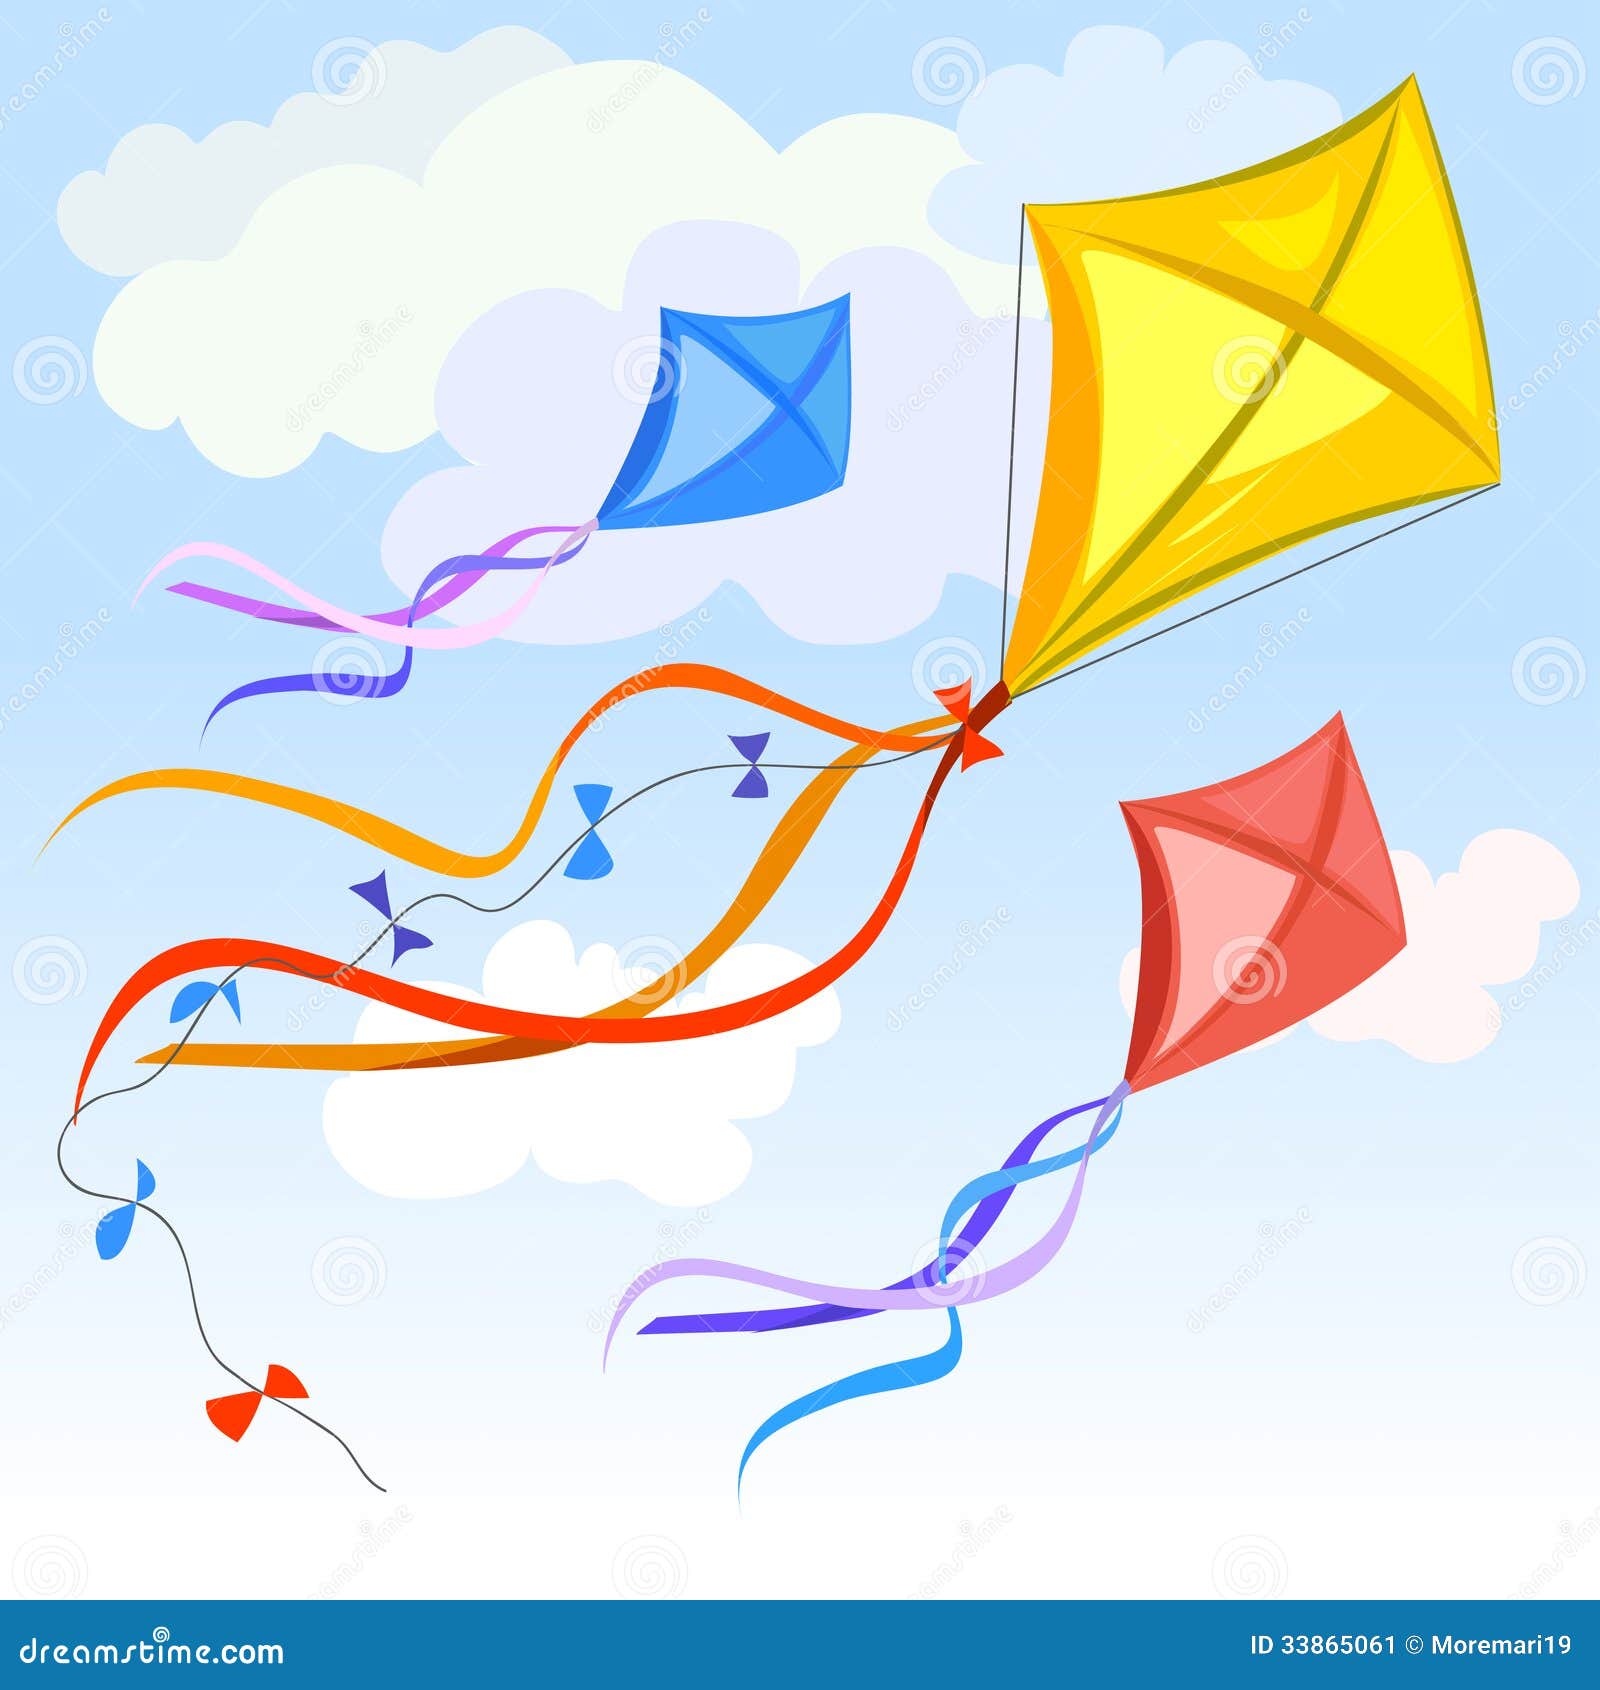 rainbow kite clip art - photo #39